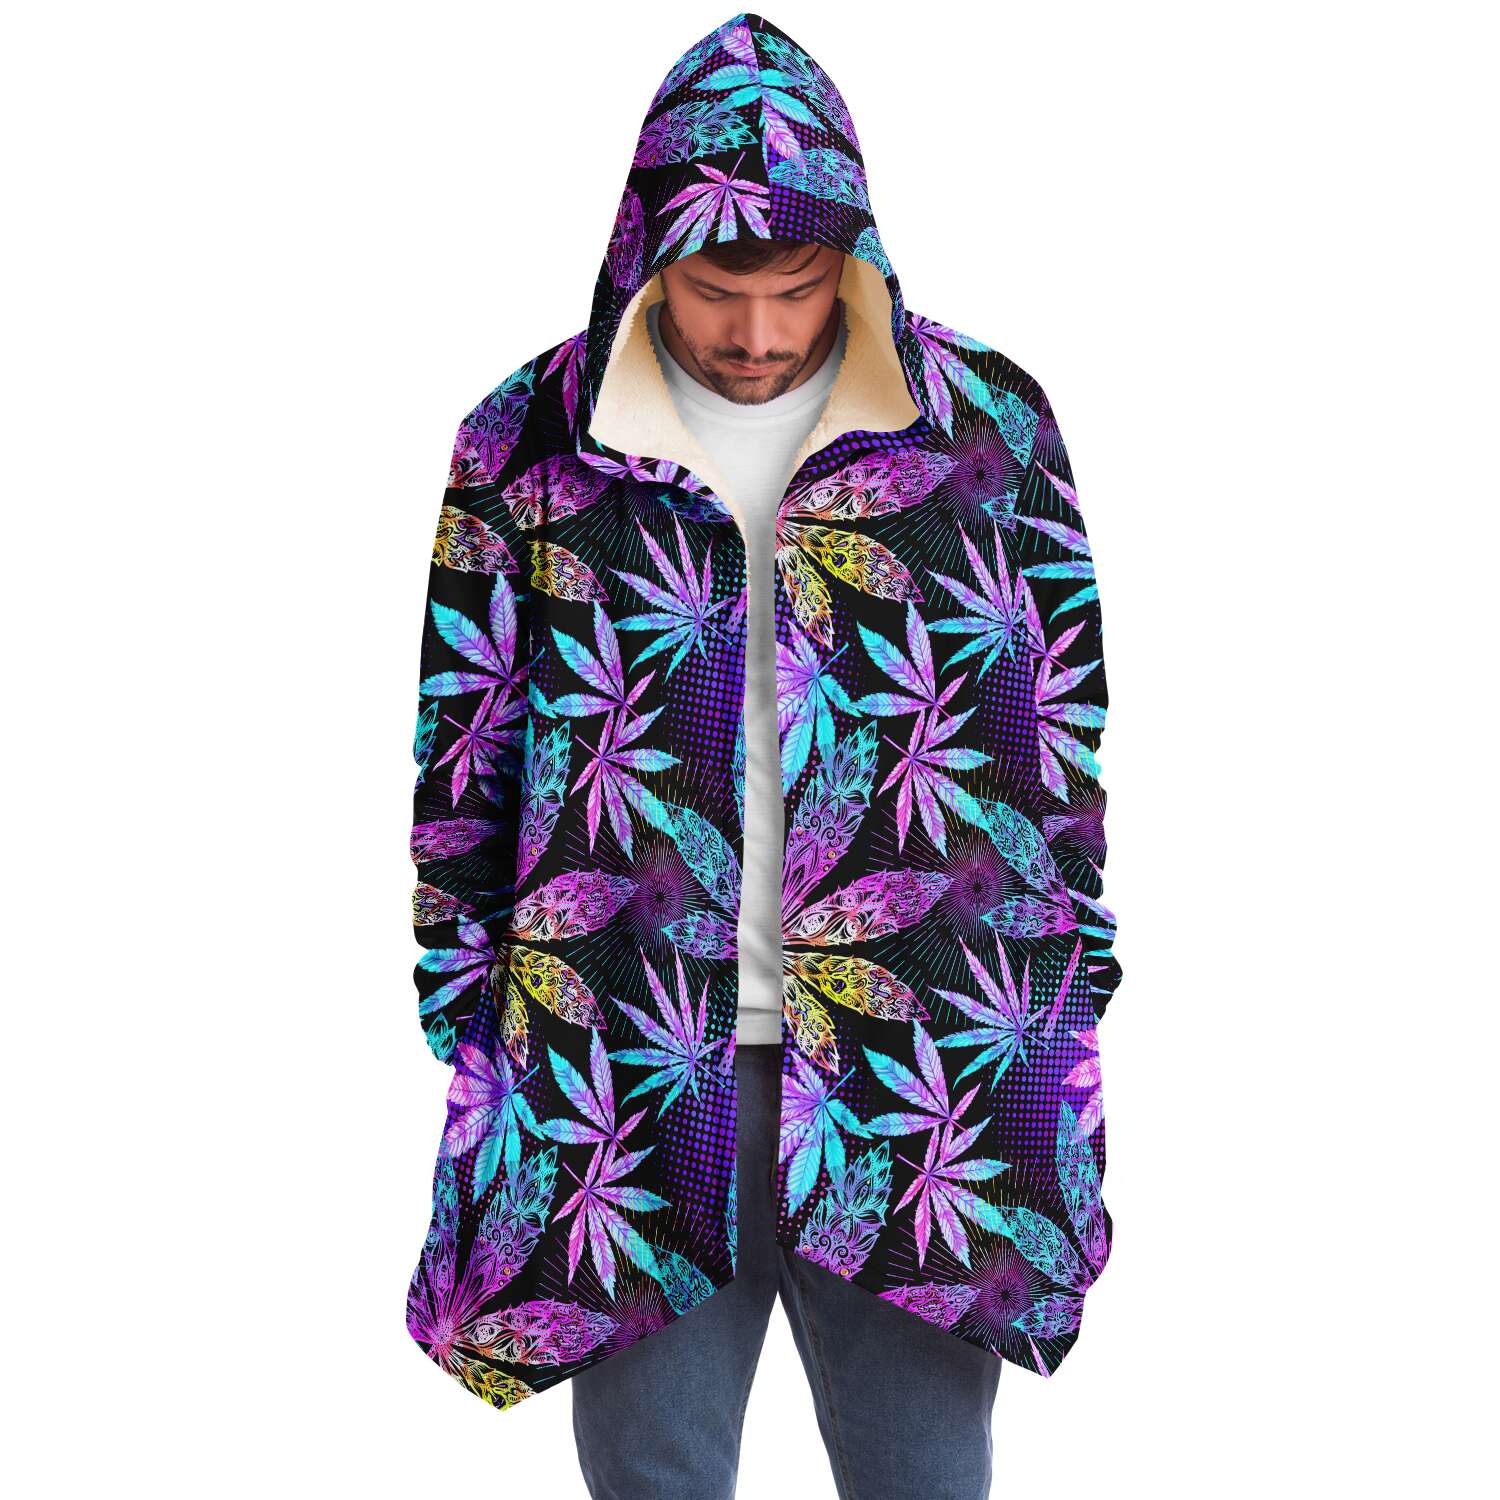 Trippy Cannabis Psychedelic Festival Cloak